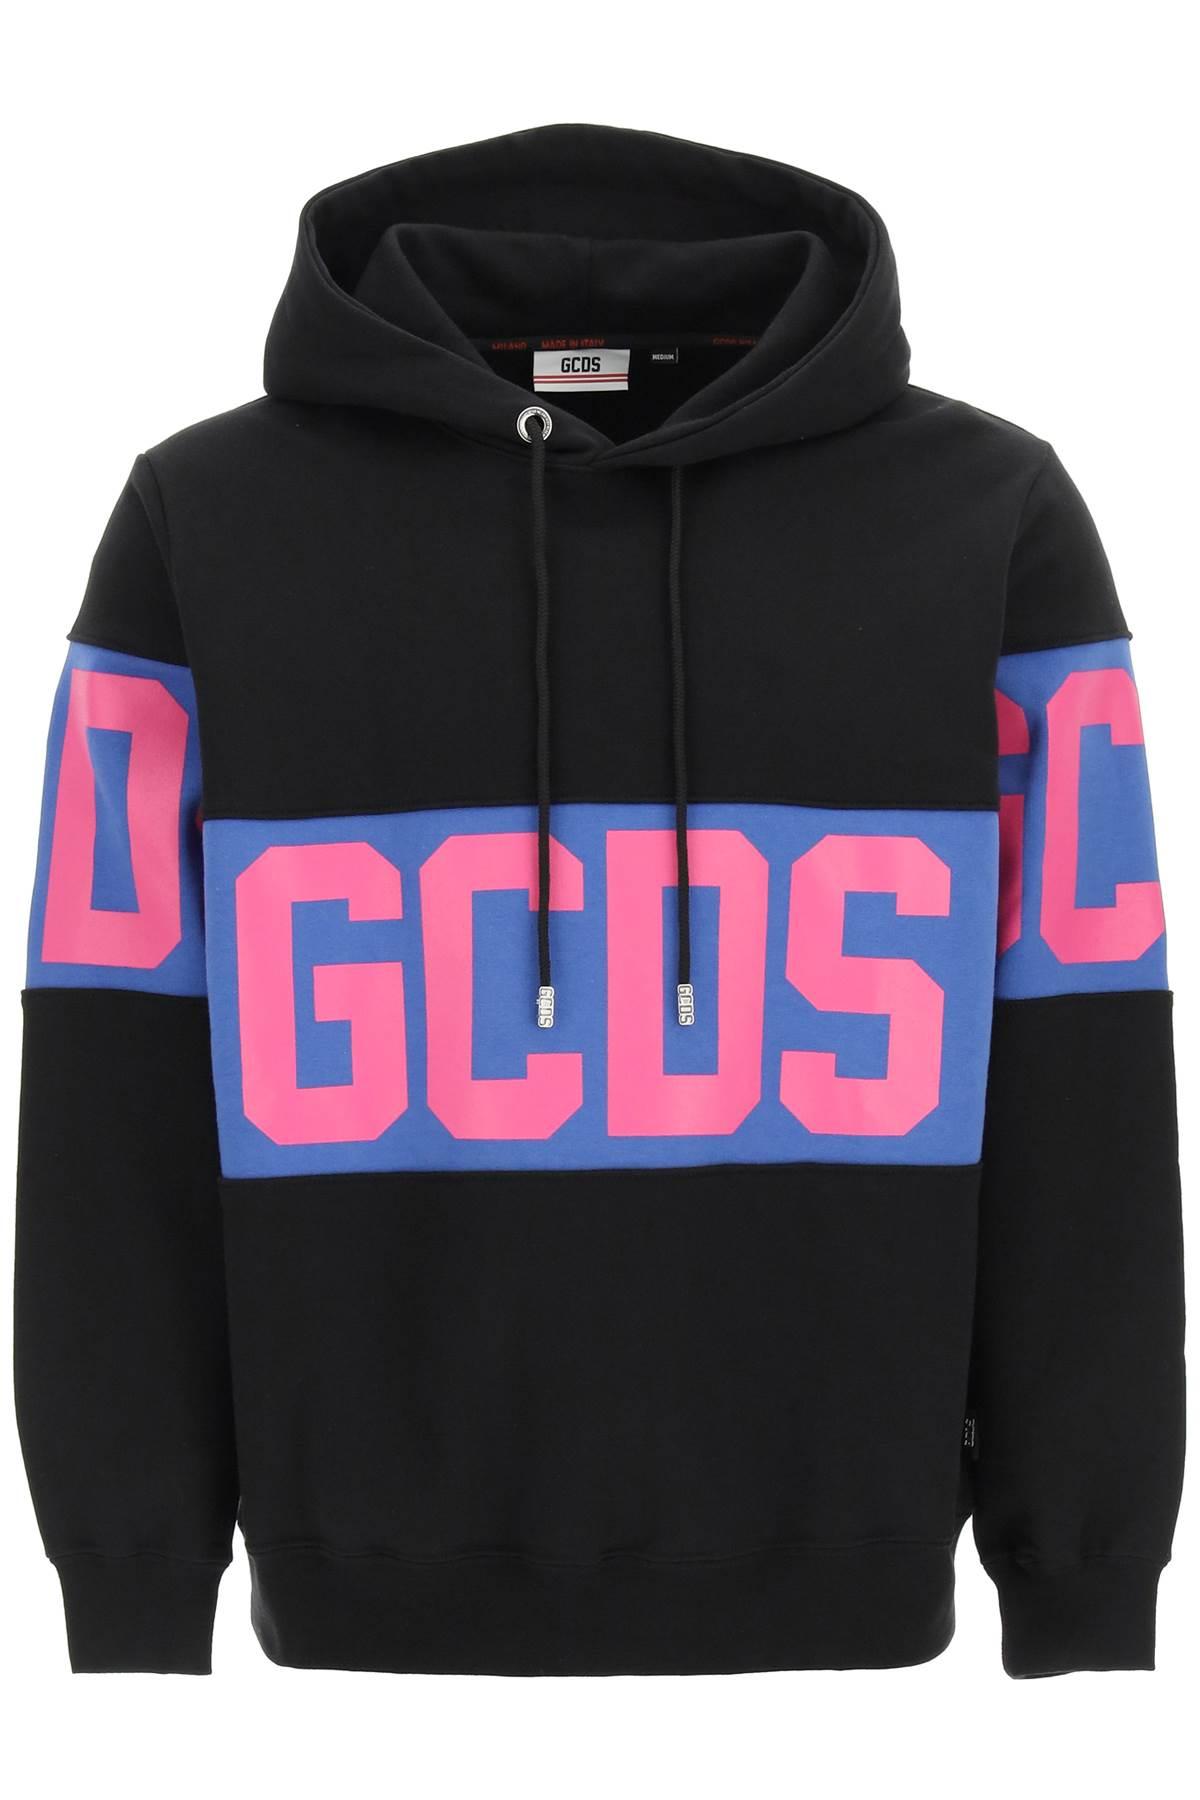 Gcds Logo Band Hoodie S Cotton in Black,Blue,Fuchsia (Black) for 